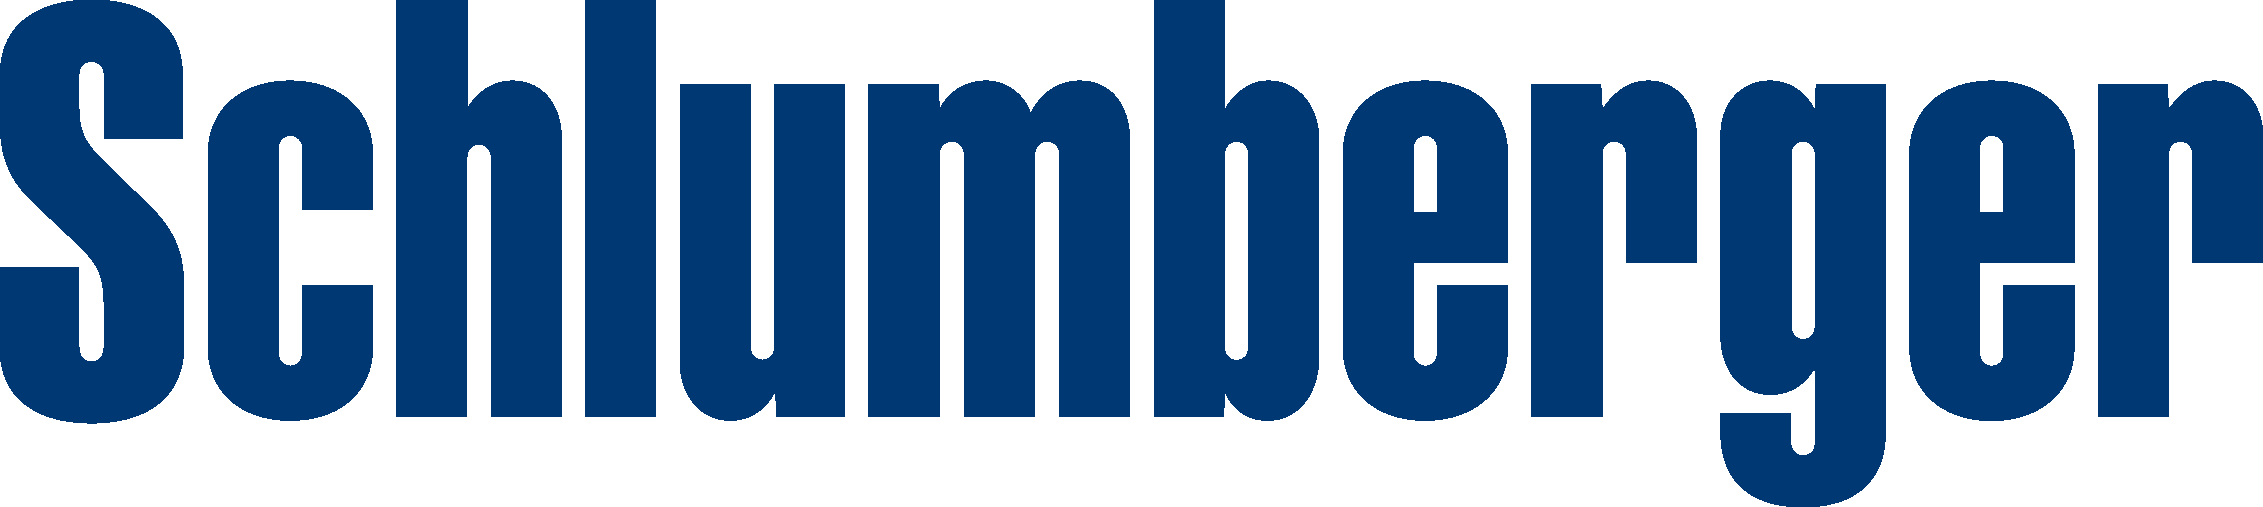 Логотип корпорации Schlumberger